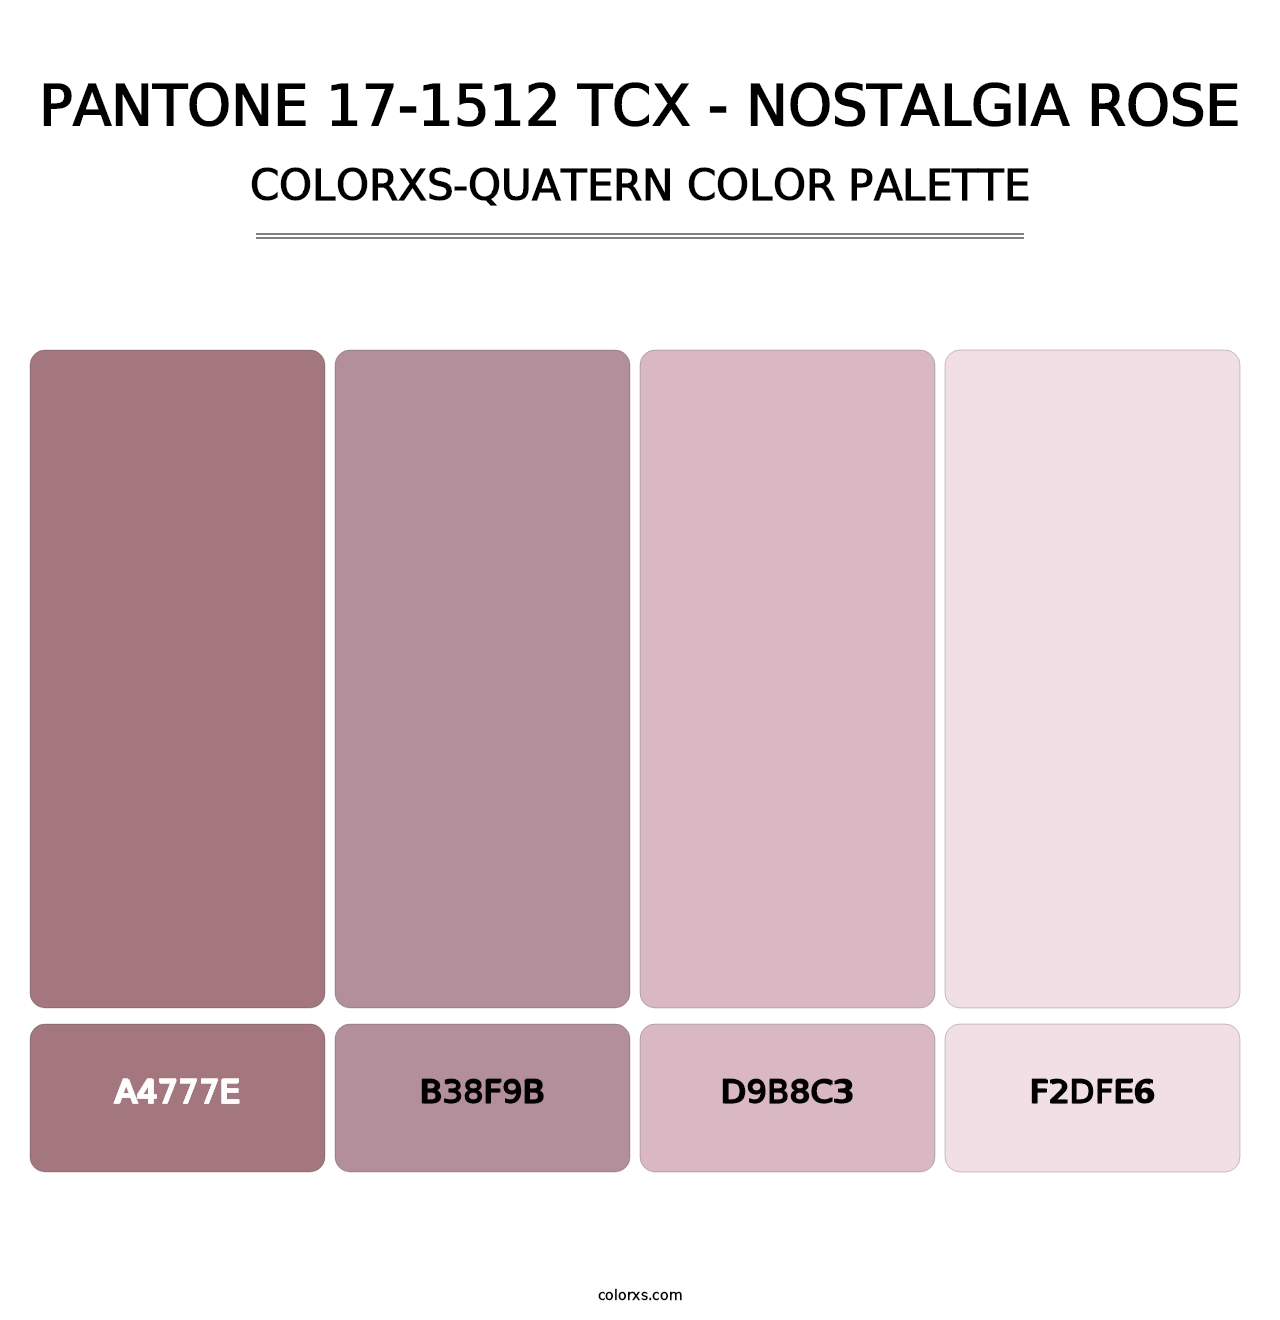 PANTONE 17-1512 TCX - Nostalgia Rose - Colorxs Quatern Palette